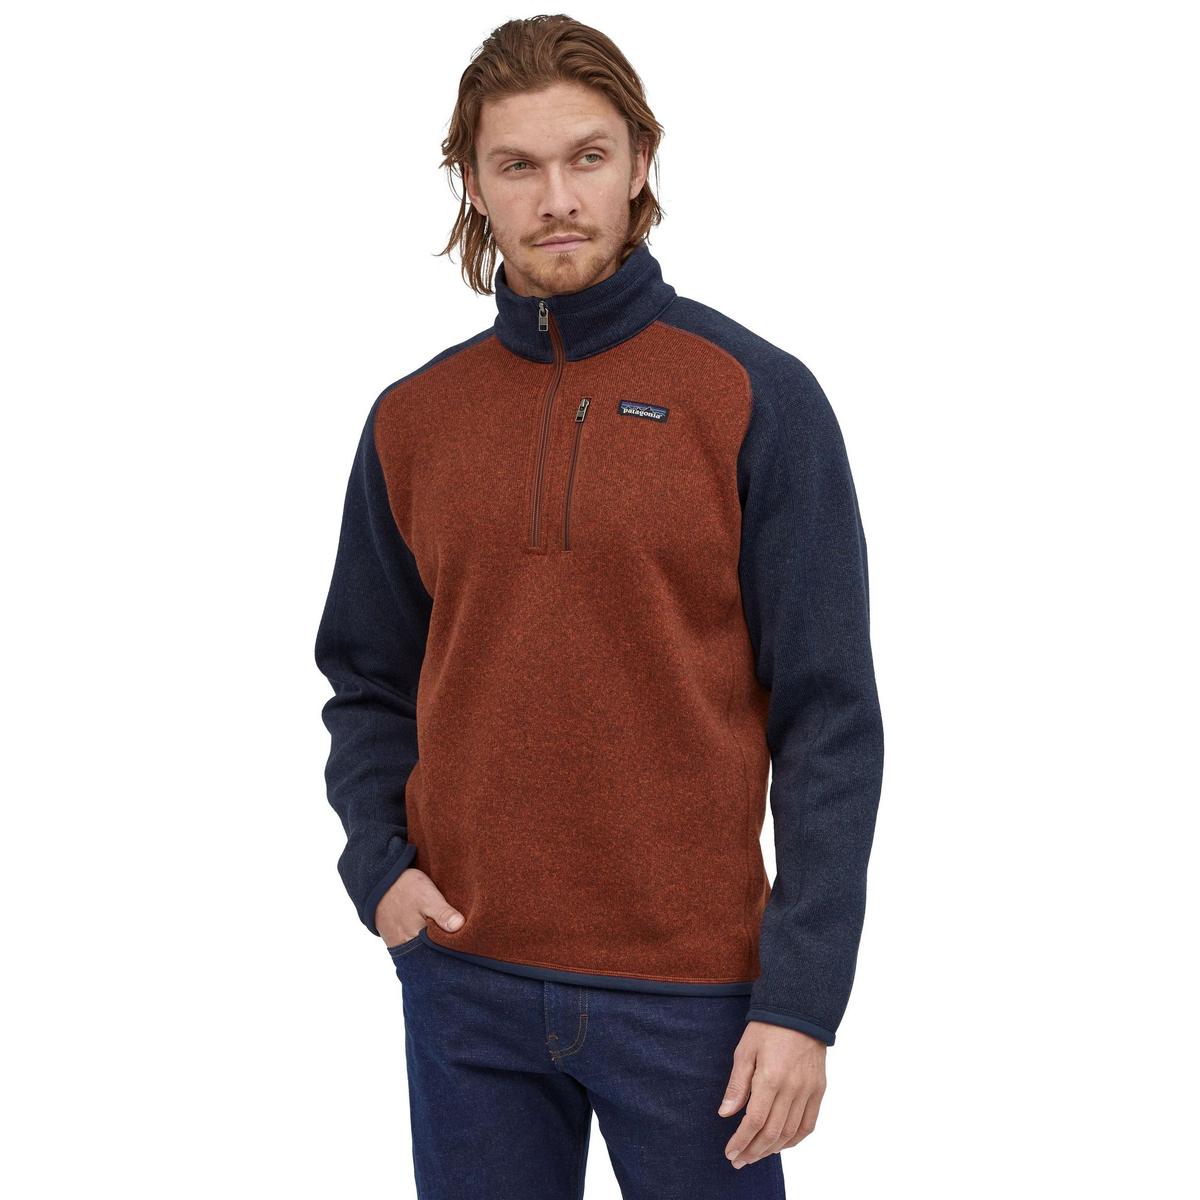 Patagonia Men's Better Sweater 1/4 Zip - Puritan Cape Cod